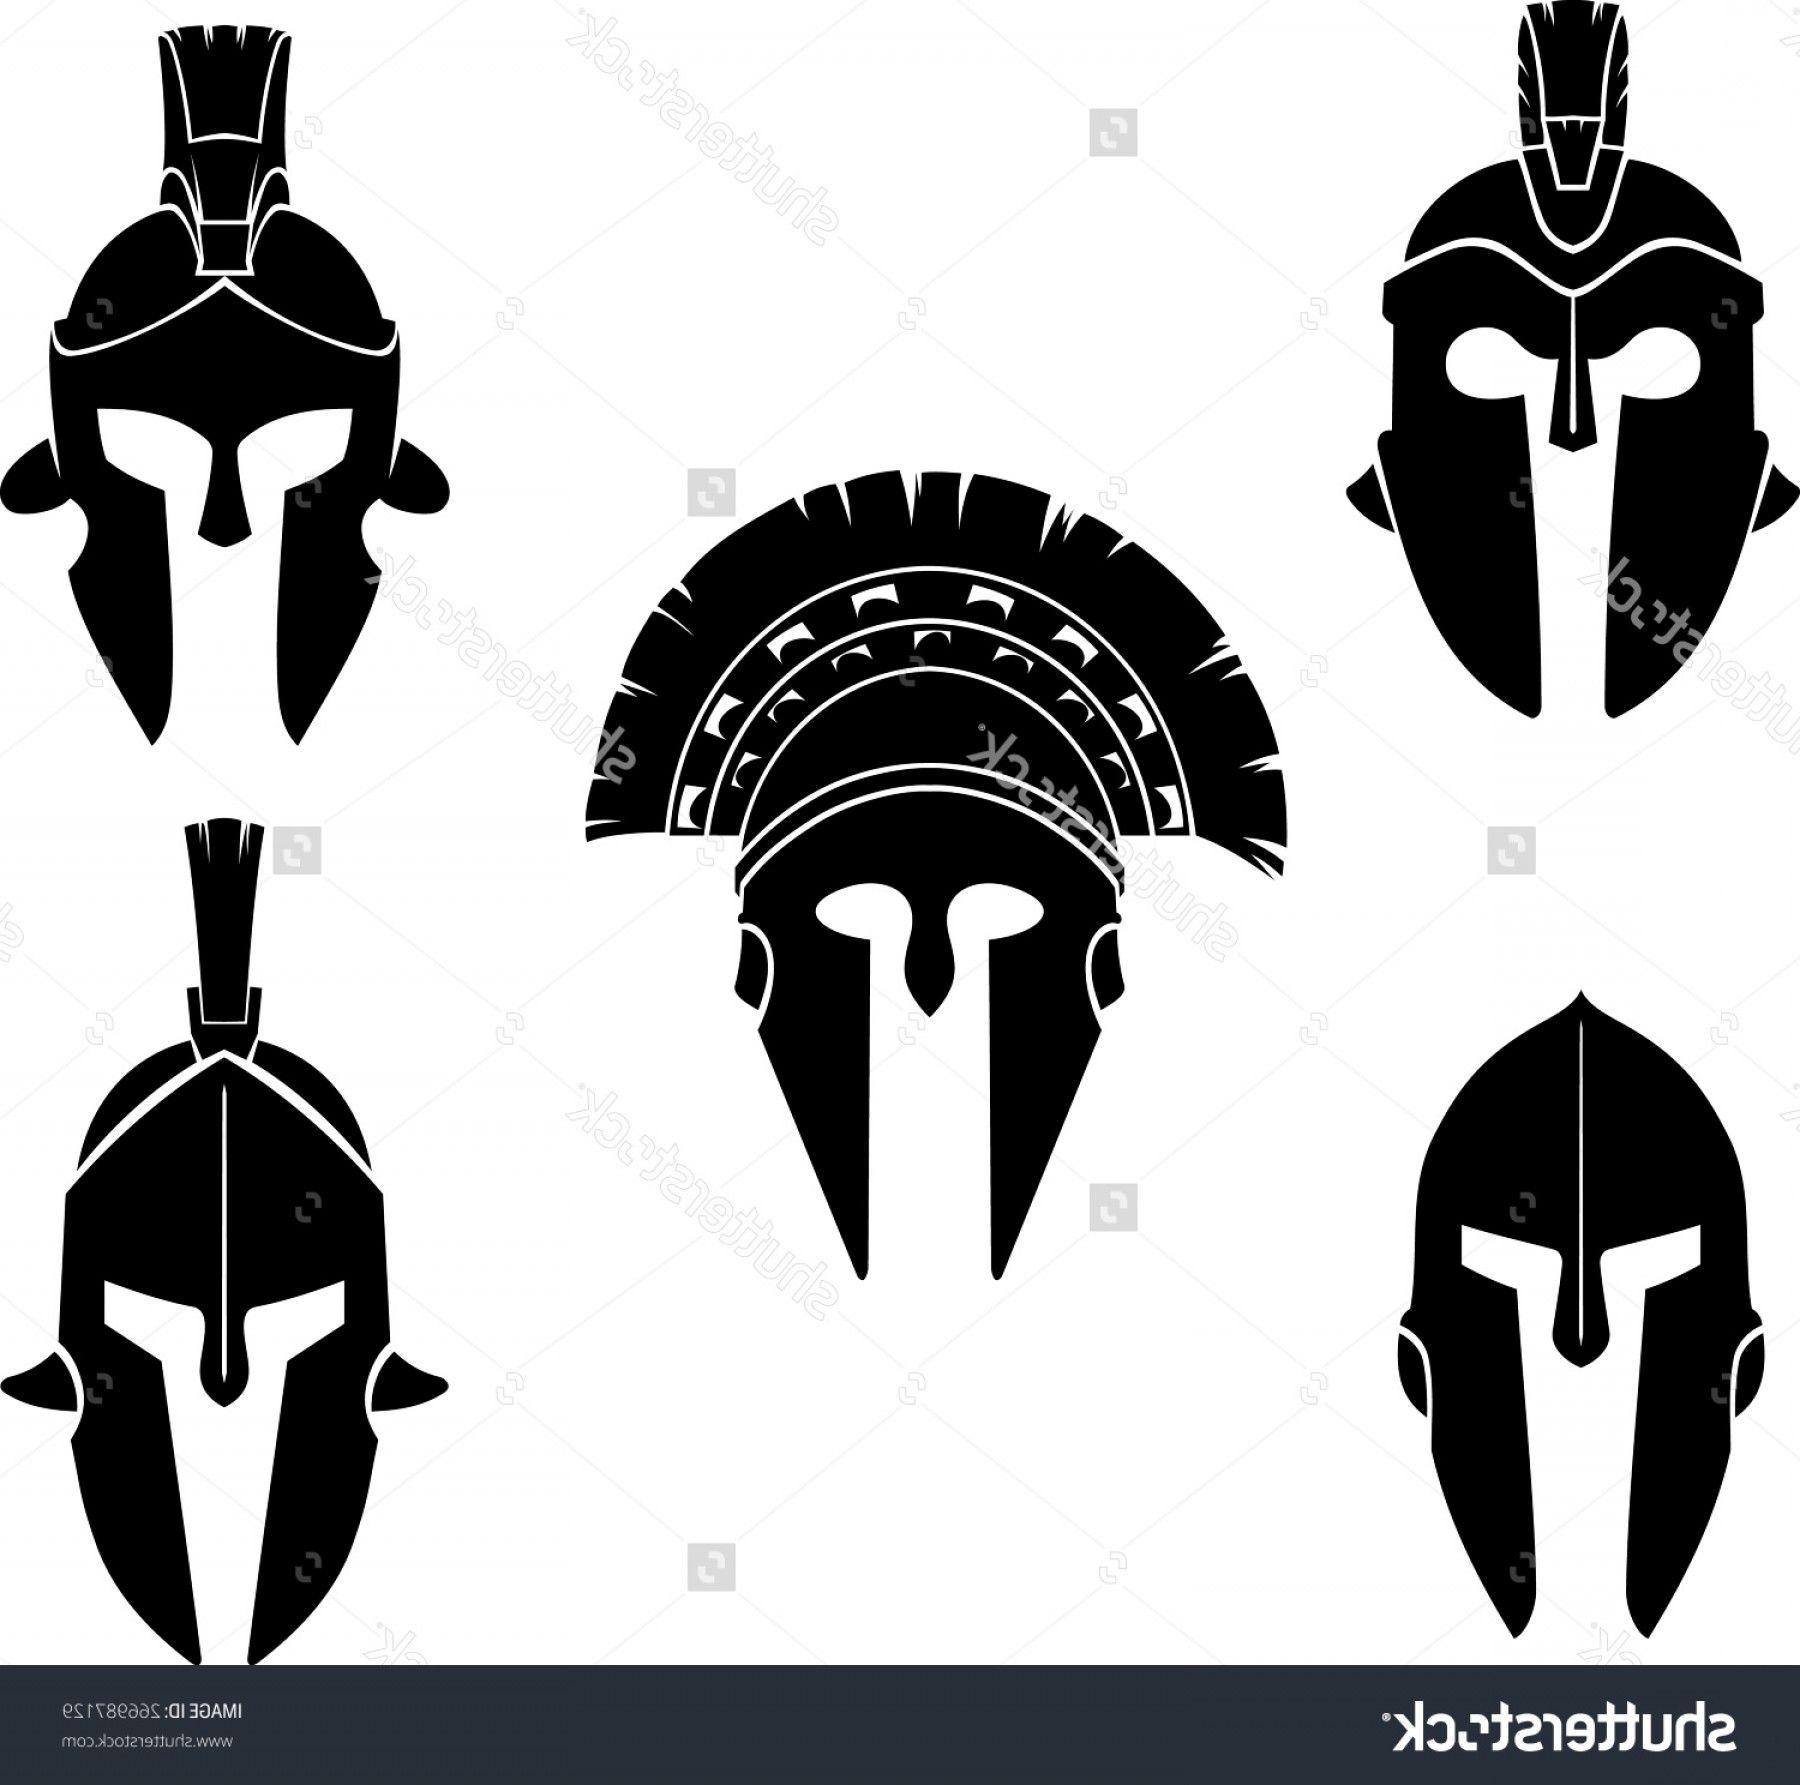 Black and White Spartan Logo - Excellent Spartan Vector Art Draw: HD Spartan Helmet Clip Art Black